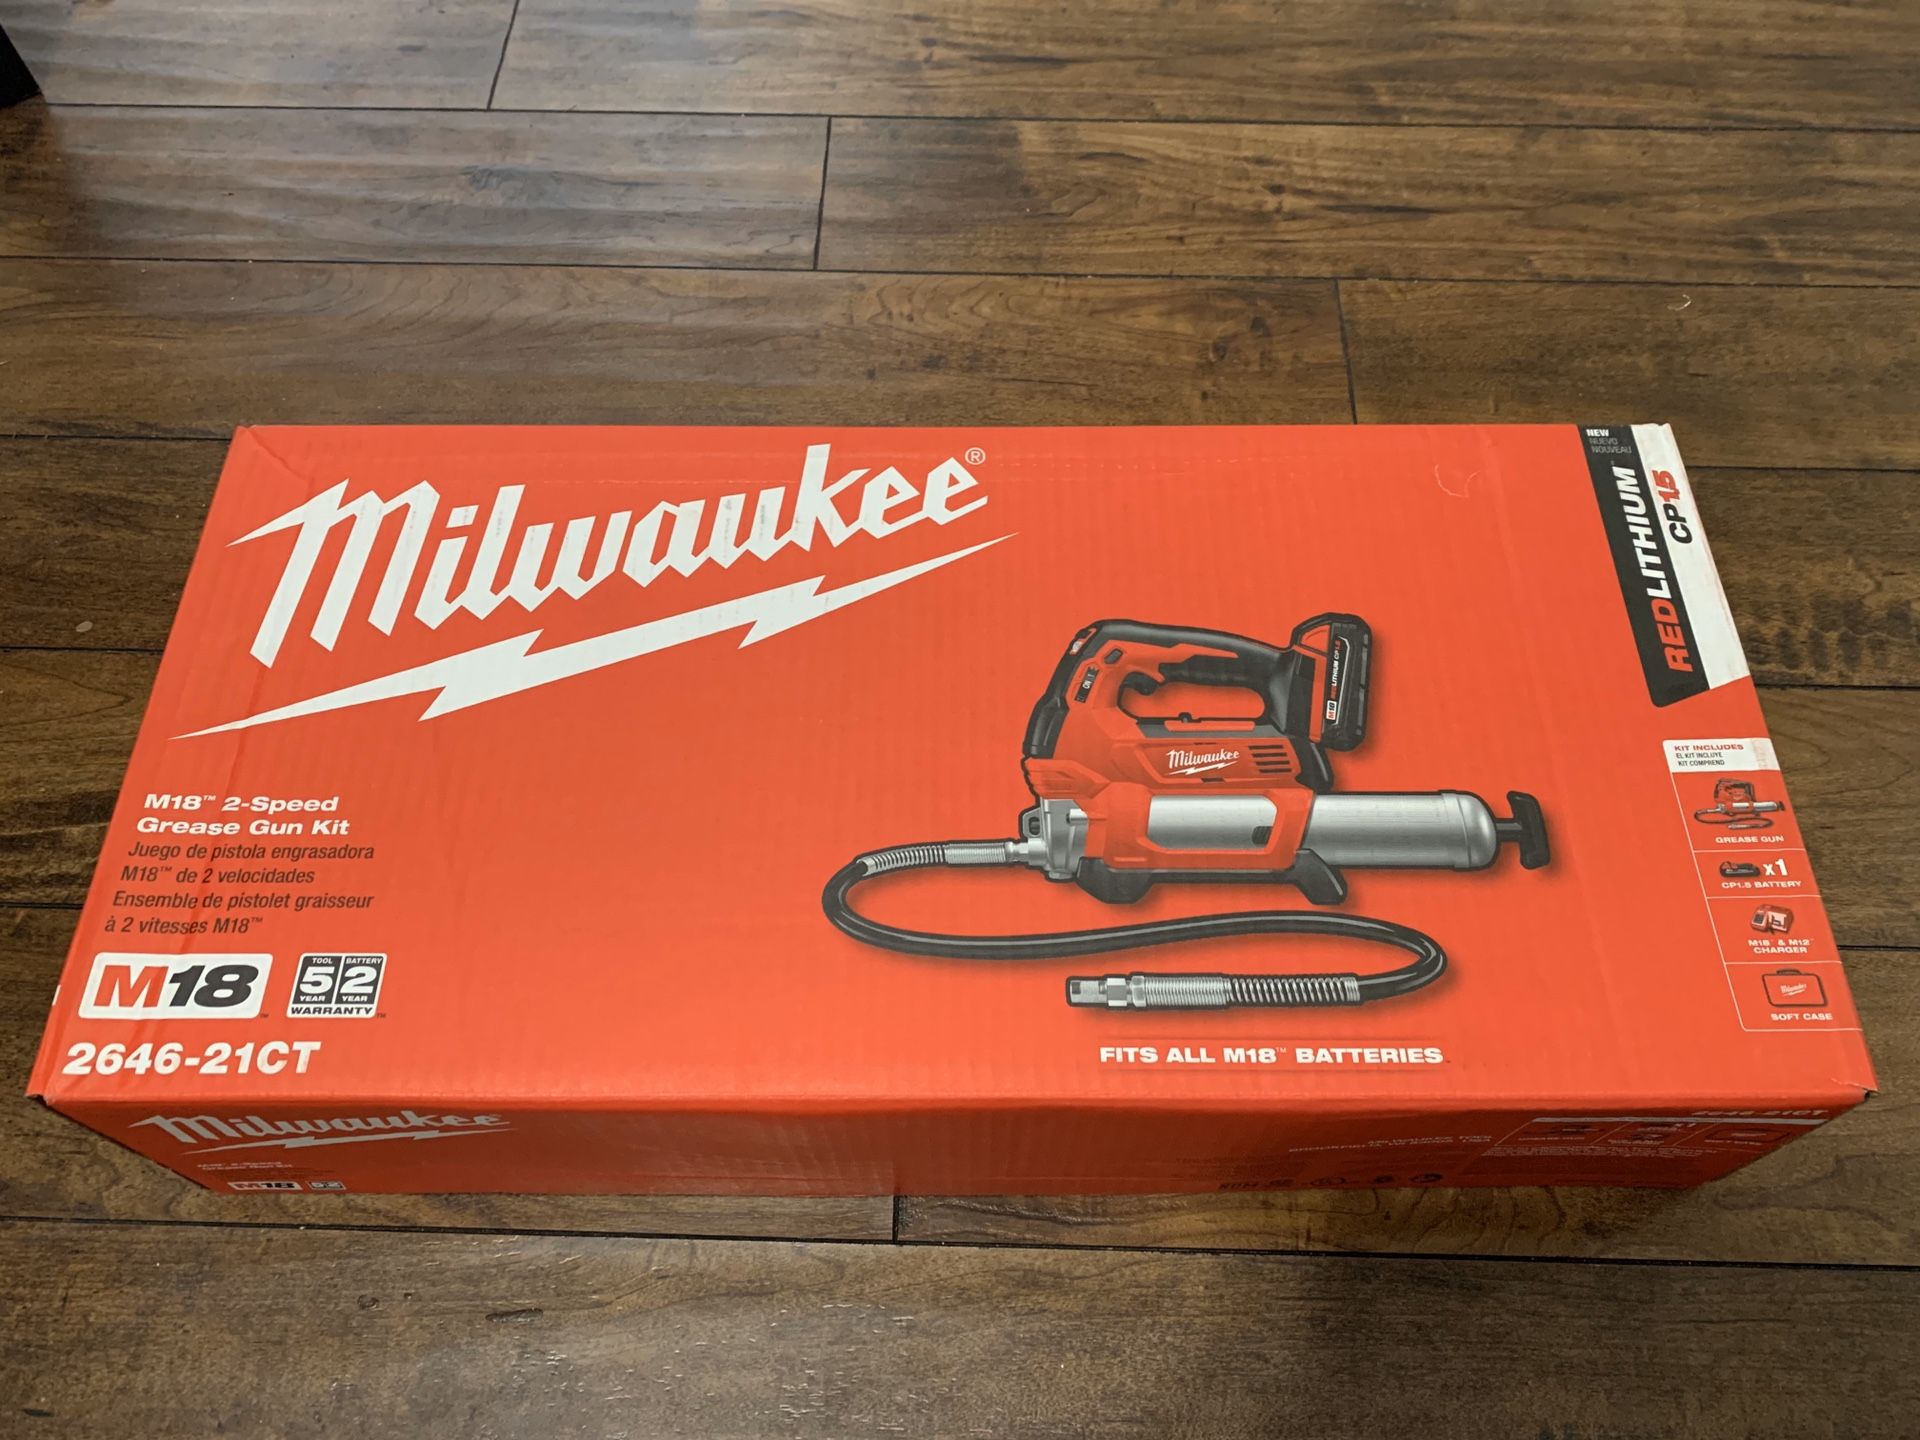 New Milwaukee grease gun